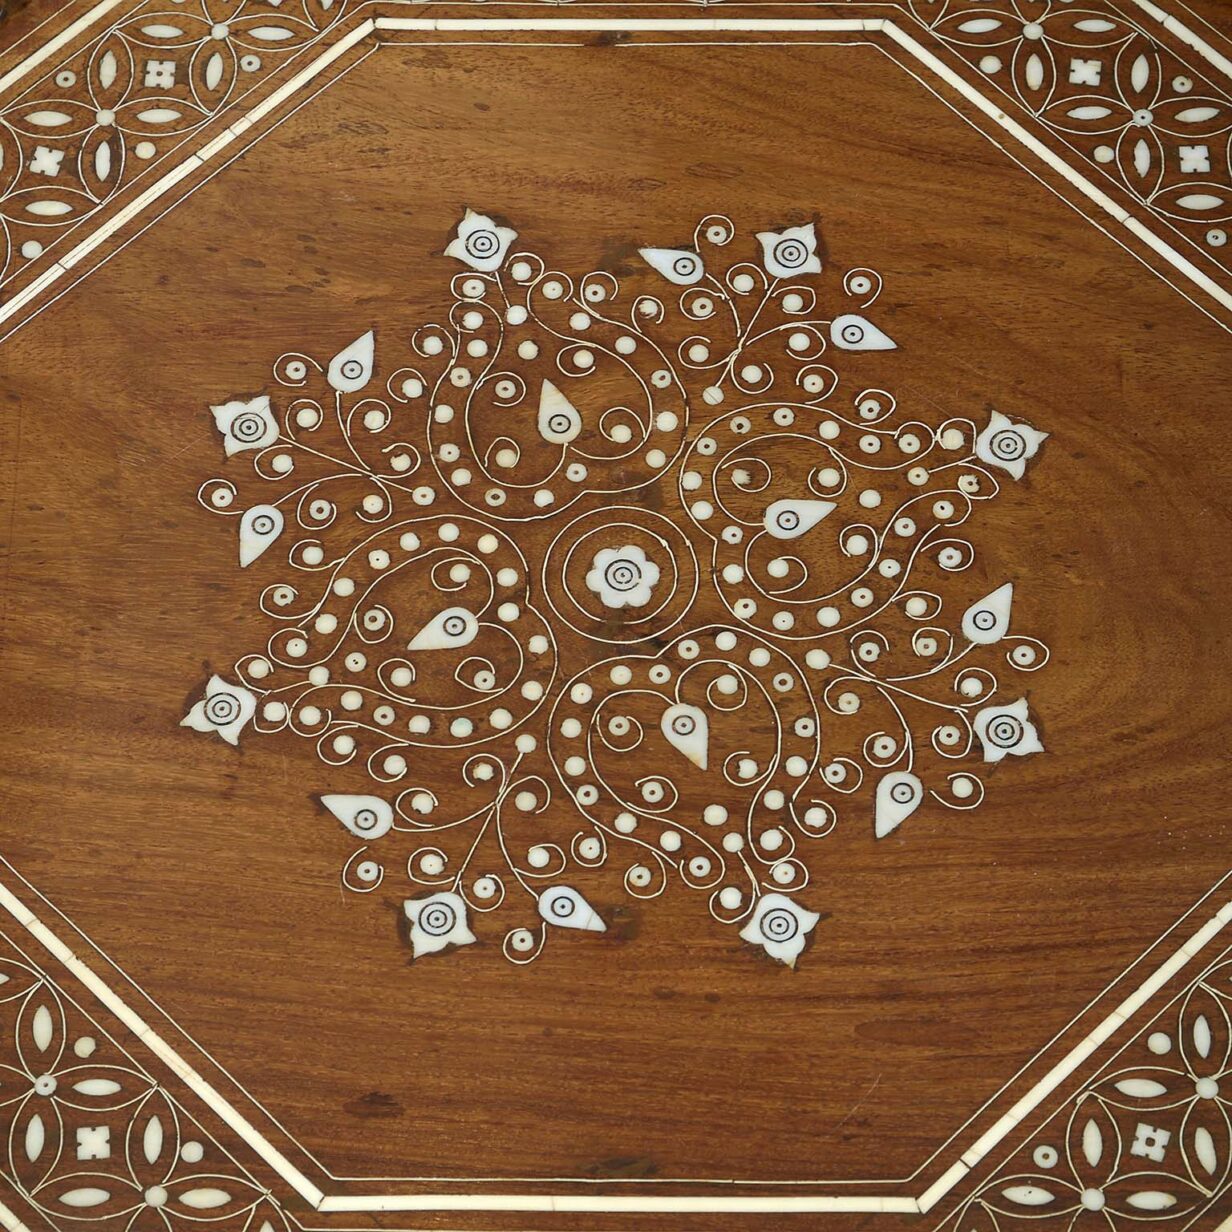 Hoshiarpur octagonal inlaid hardwood folding occasional table